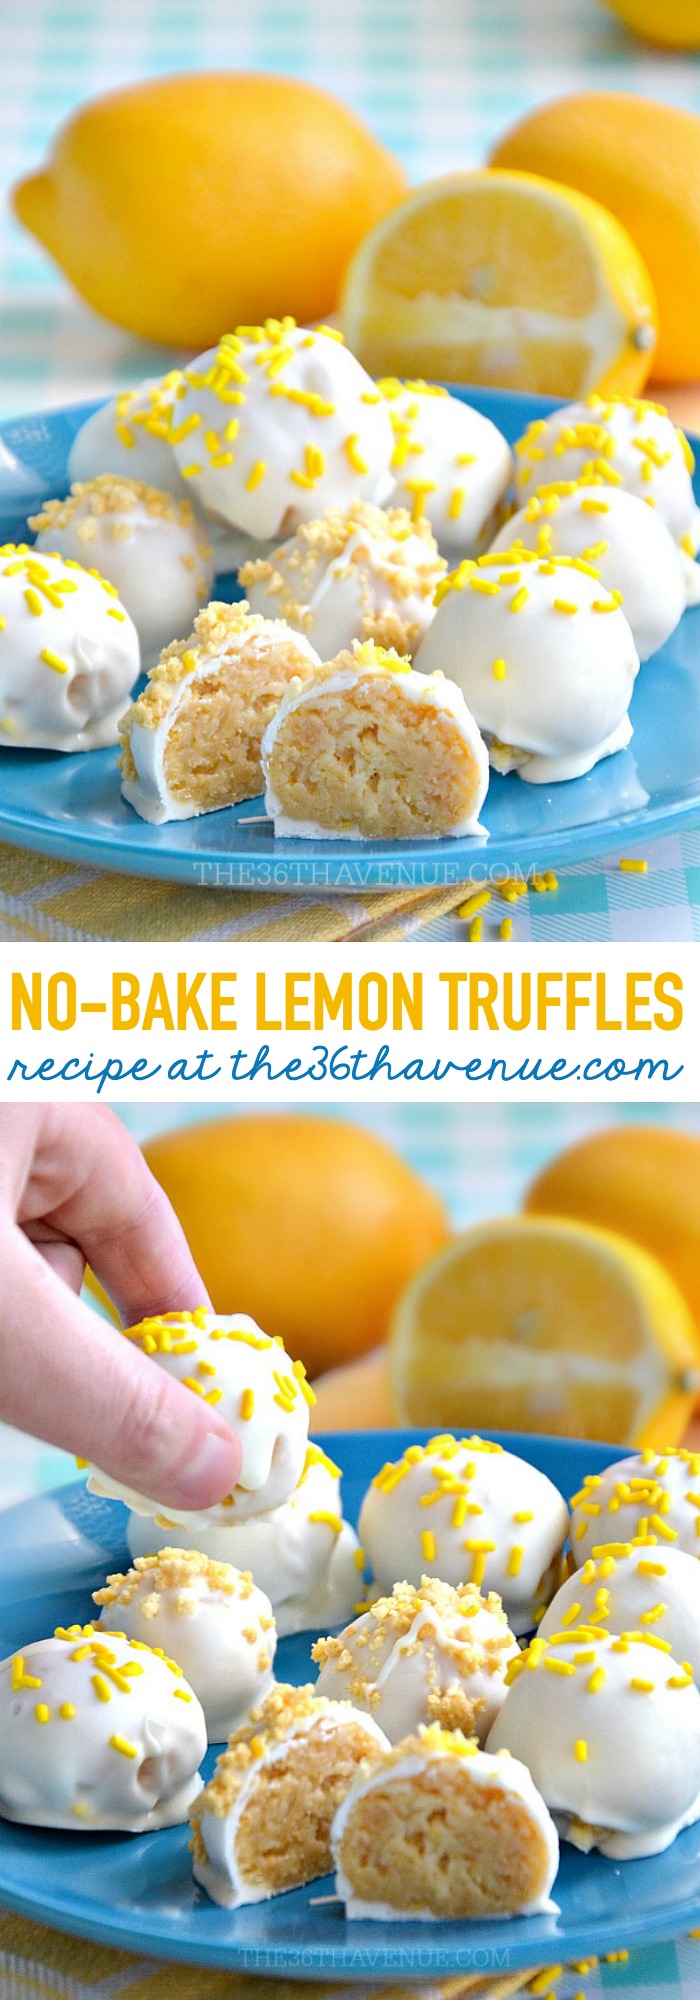 Lemon Truffles by the36thavenue.com